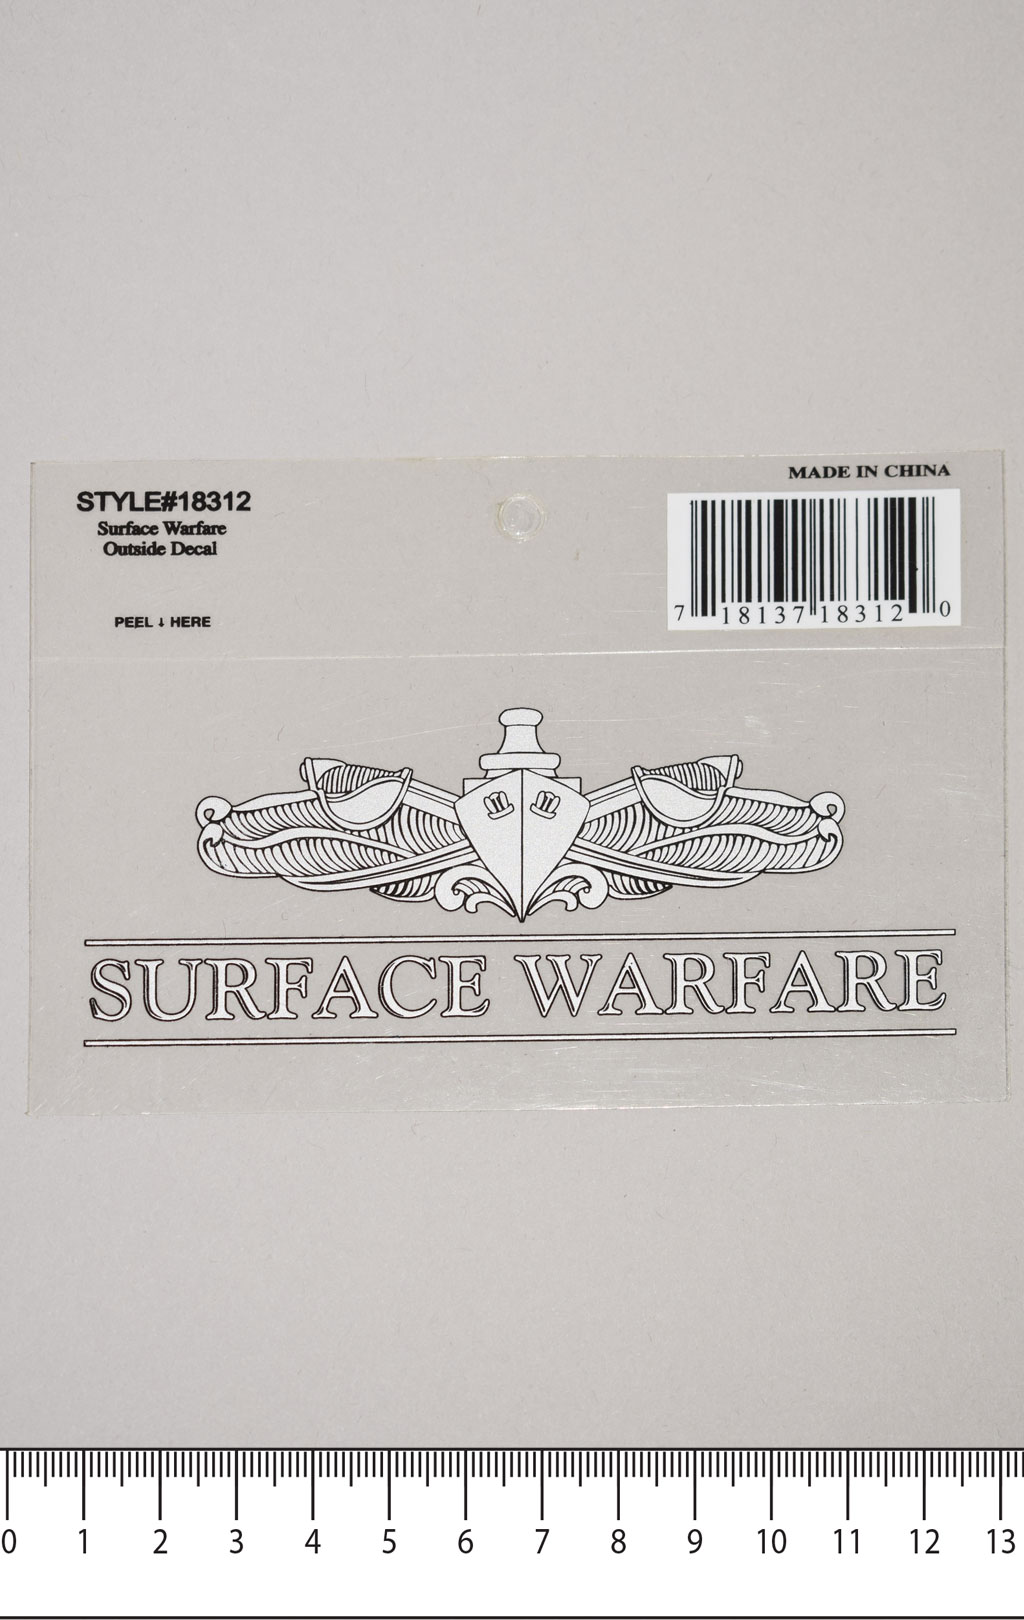 Наклейка SURFACE WARFARE white #18312 США